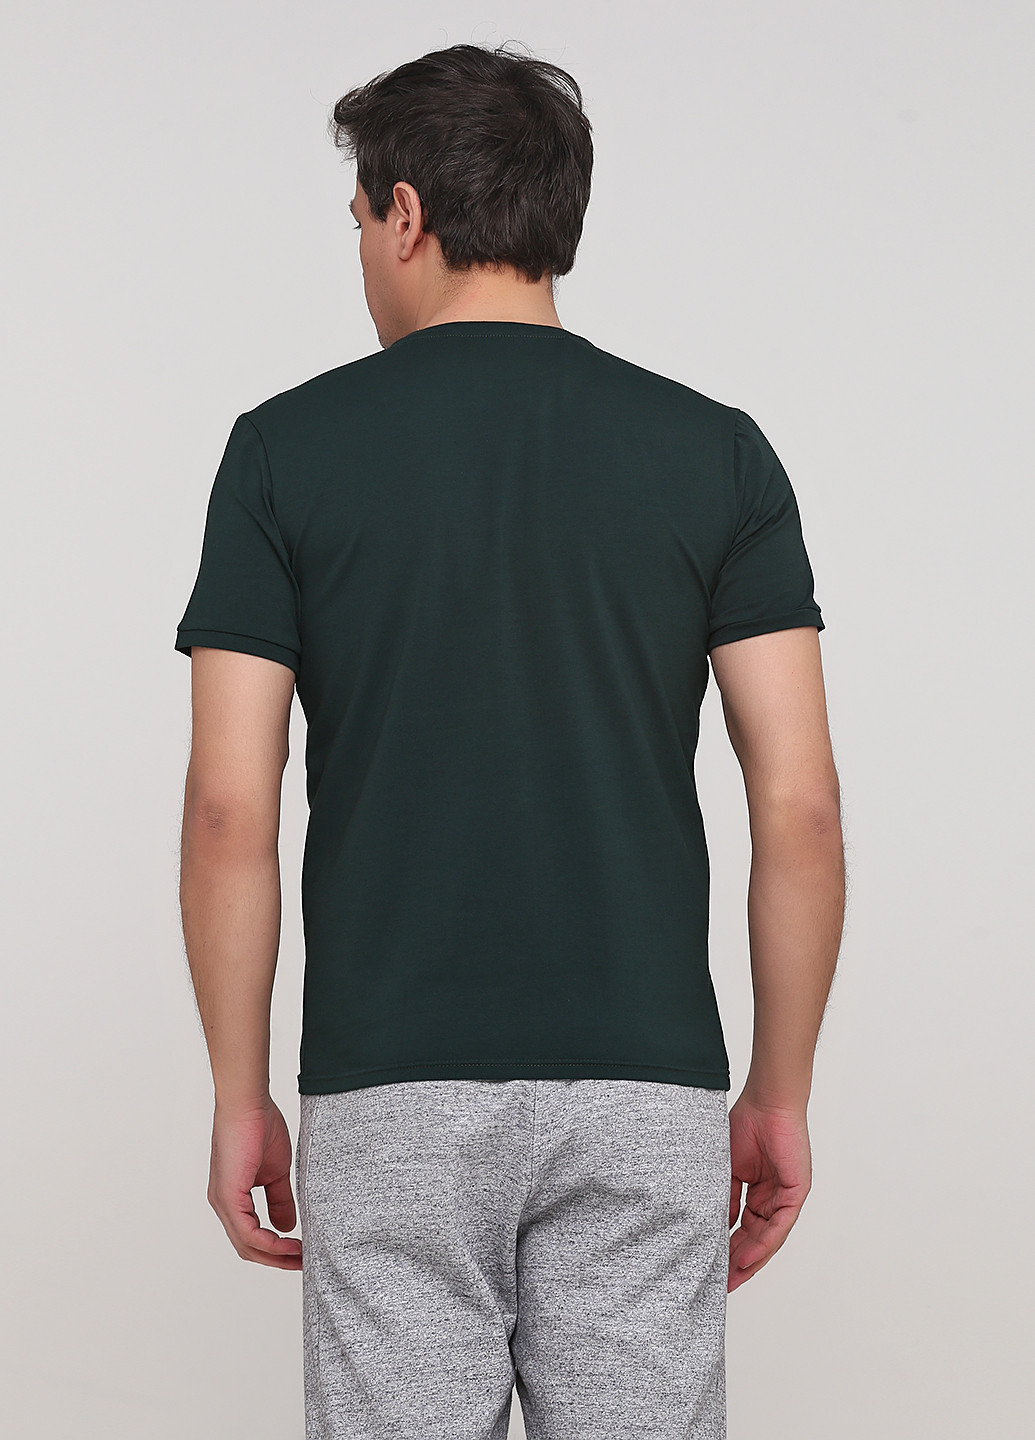 Темно-зеленая футболка мужская 19м440-24 Malta